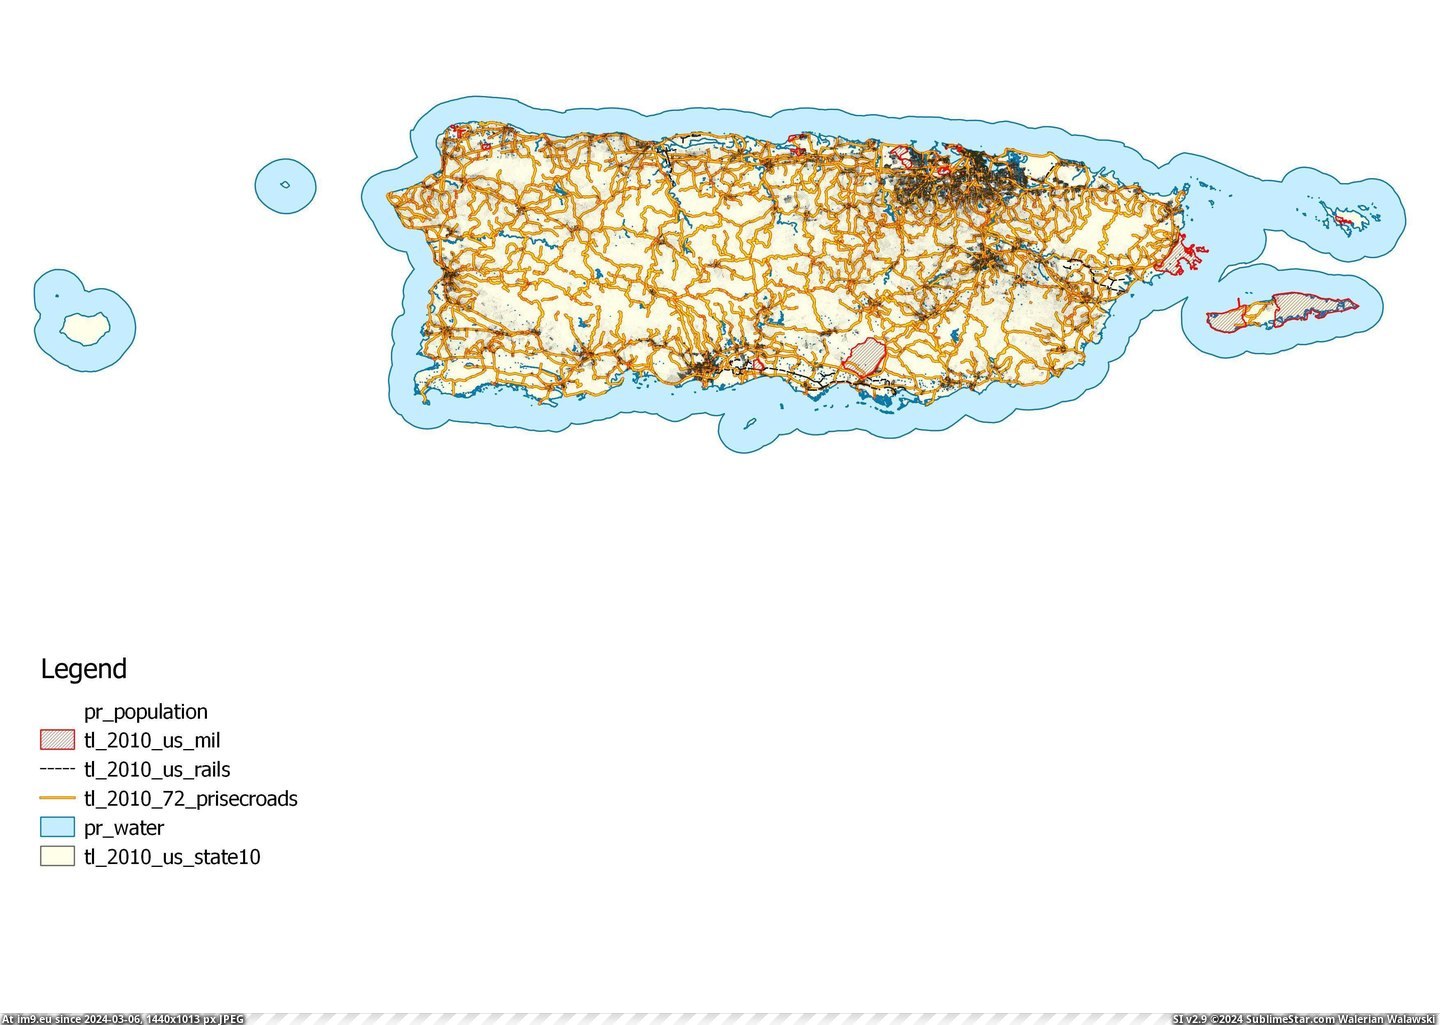 #Map #Population #Rico #Dot #Puerto [Mapporn] Population Dot Map Puerto Rico [3507x2480] Pic. (Bild von album My r/MAPS favs))